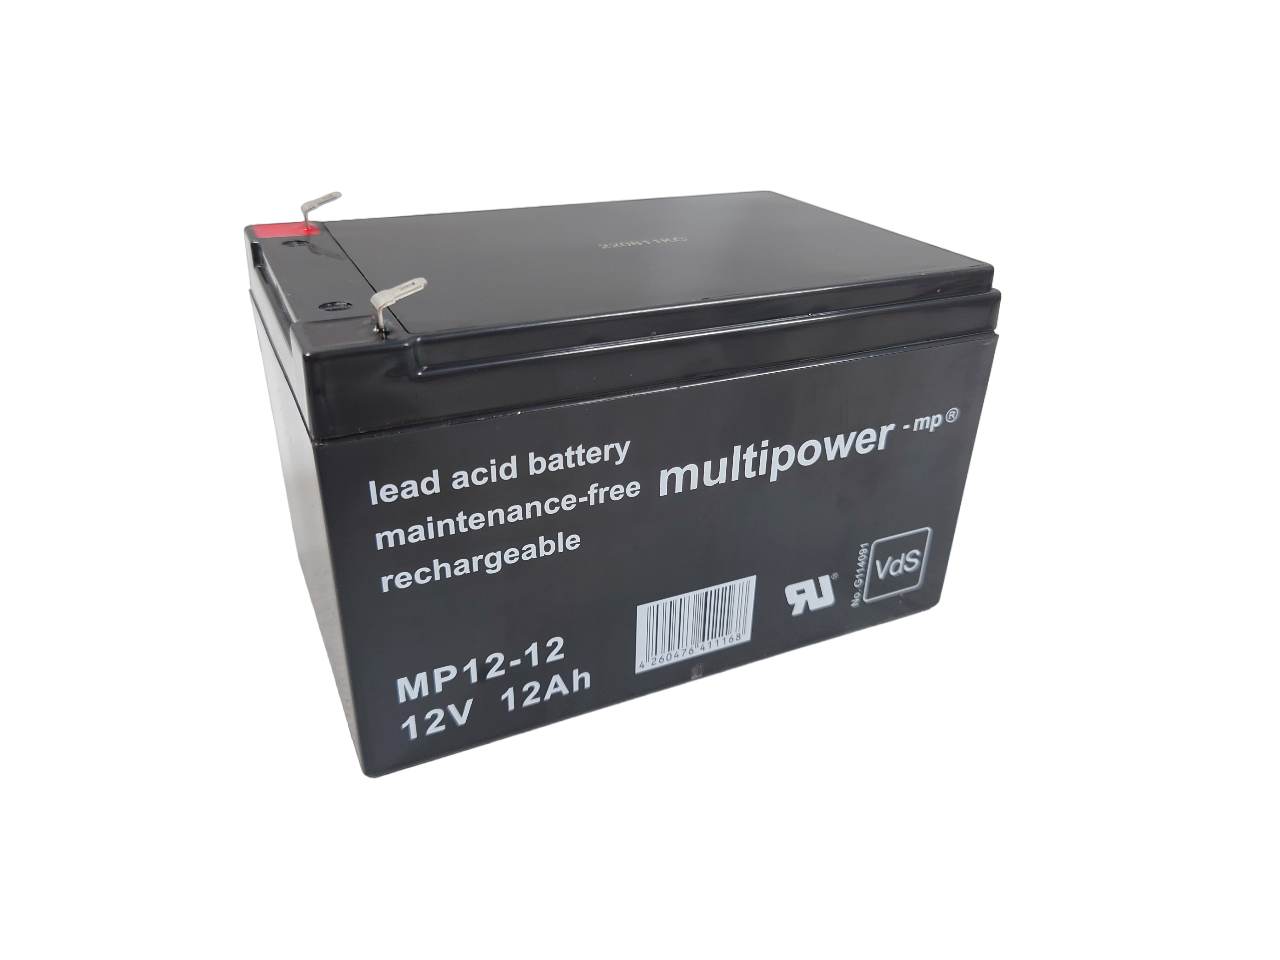 Multipower MP 12-12 VdS